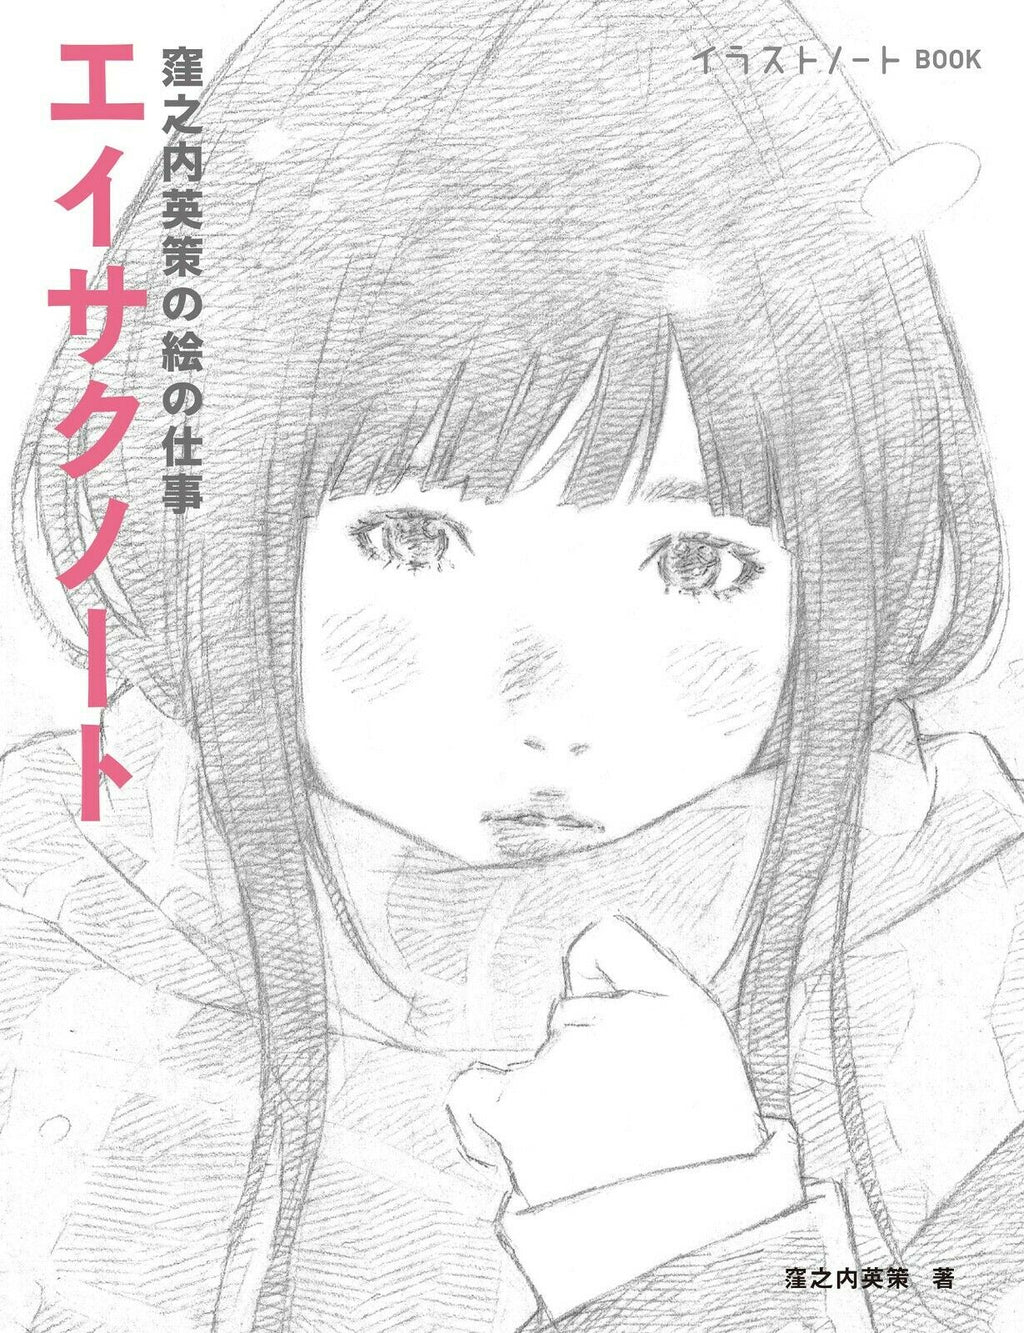 NEW Eisaku Kubonouchi Works "Eisaku Note" | JAPAN Manga Art Book